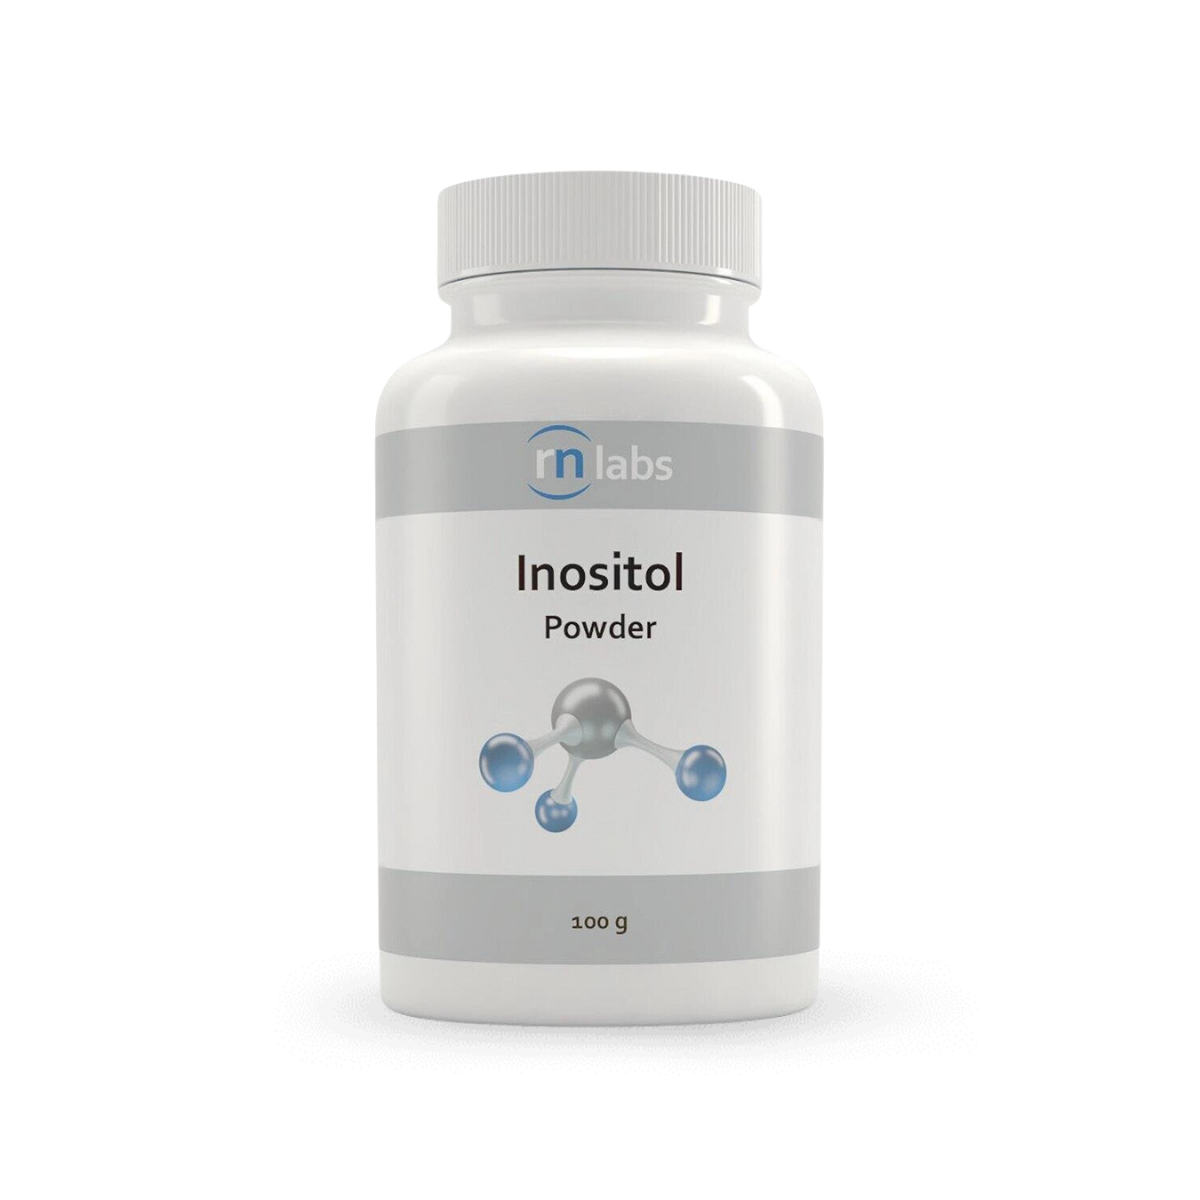   RN Labs Inositol Powder 100g